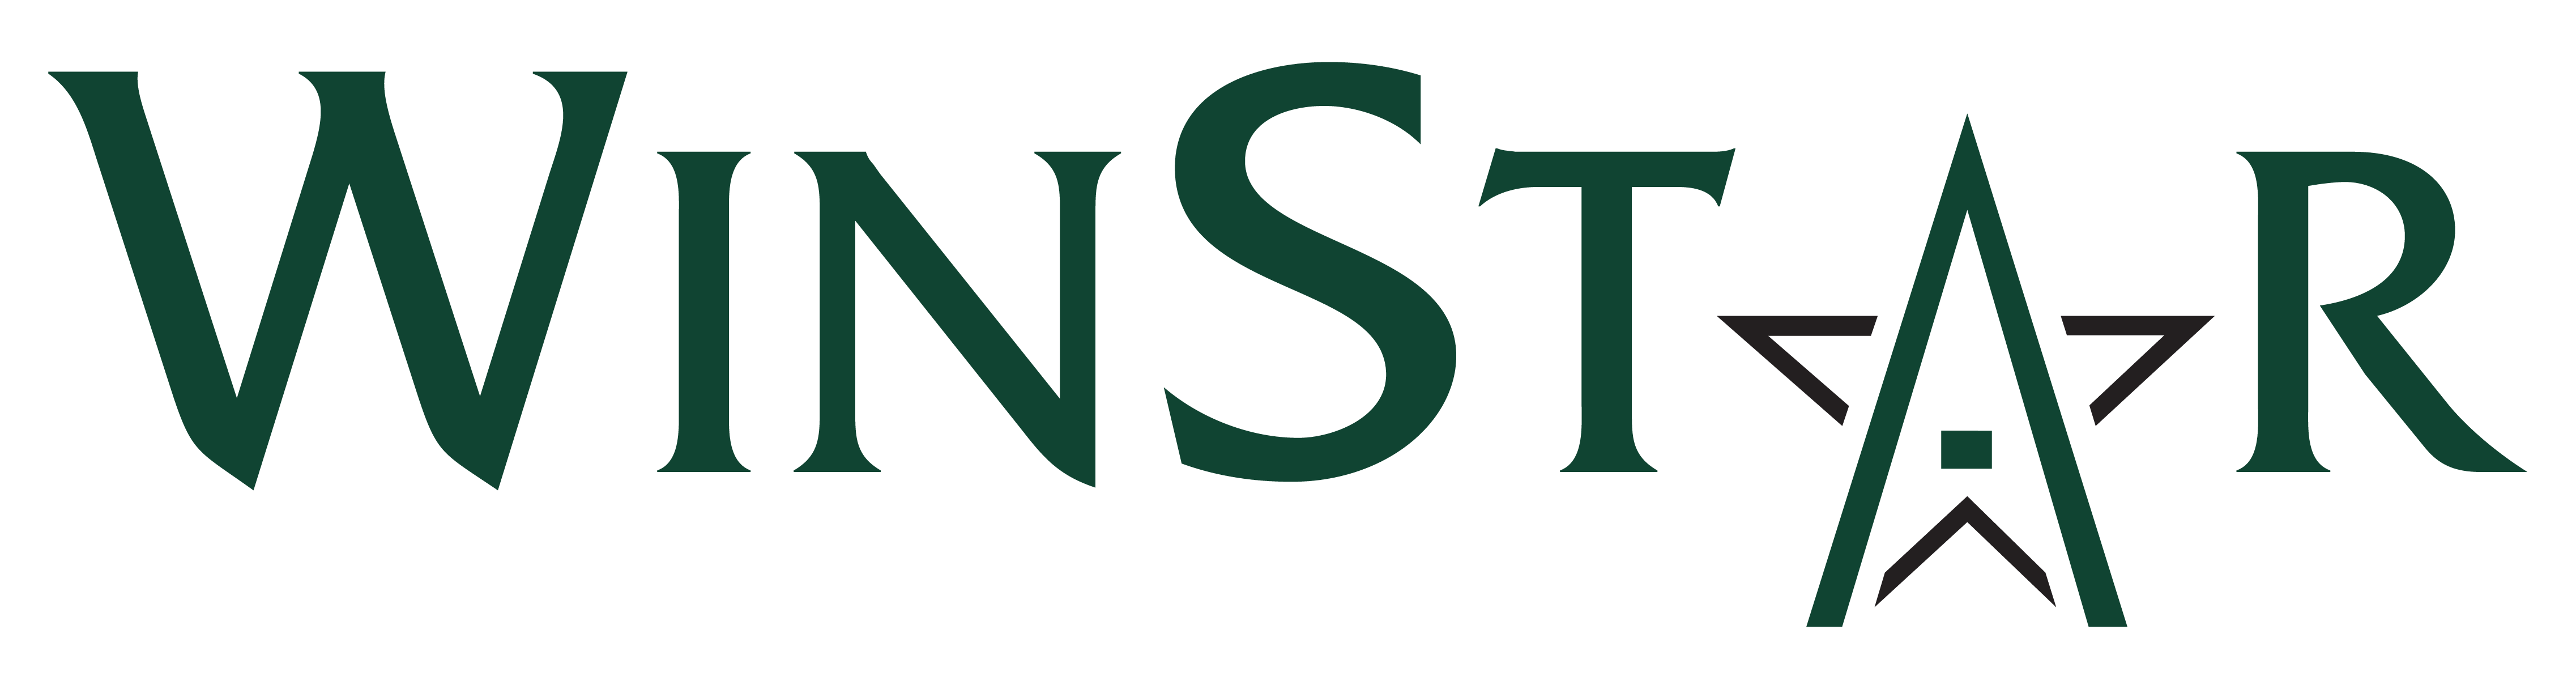 WinStar Farm Logo